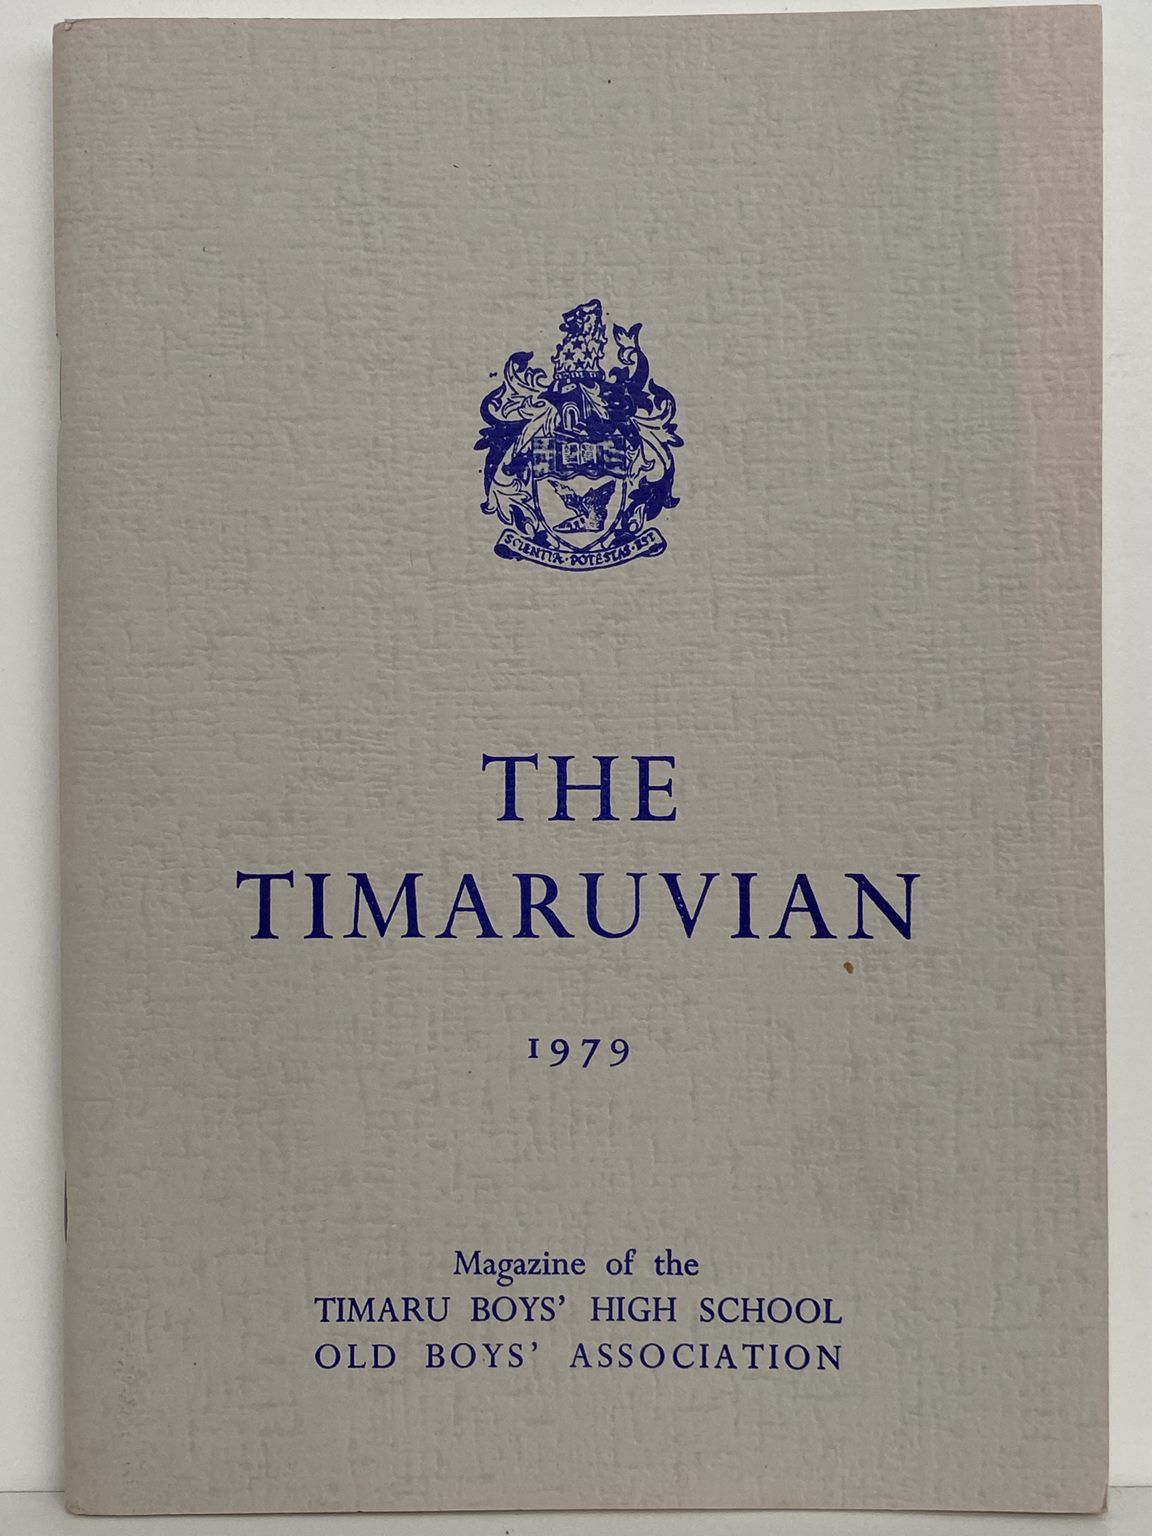 THE TIMARUVIAN: Magazine of the Timaru Boys' High School Old Boys' Association 1979